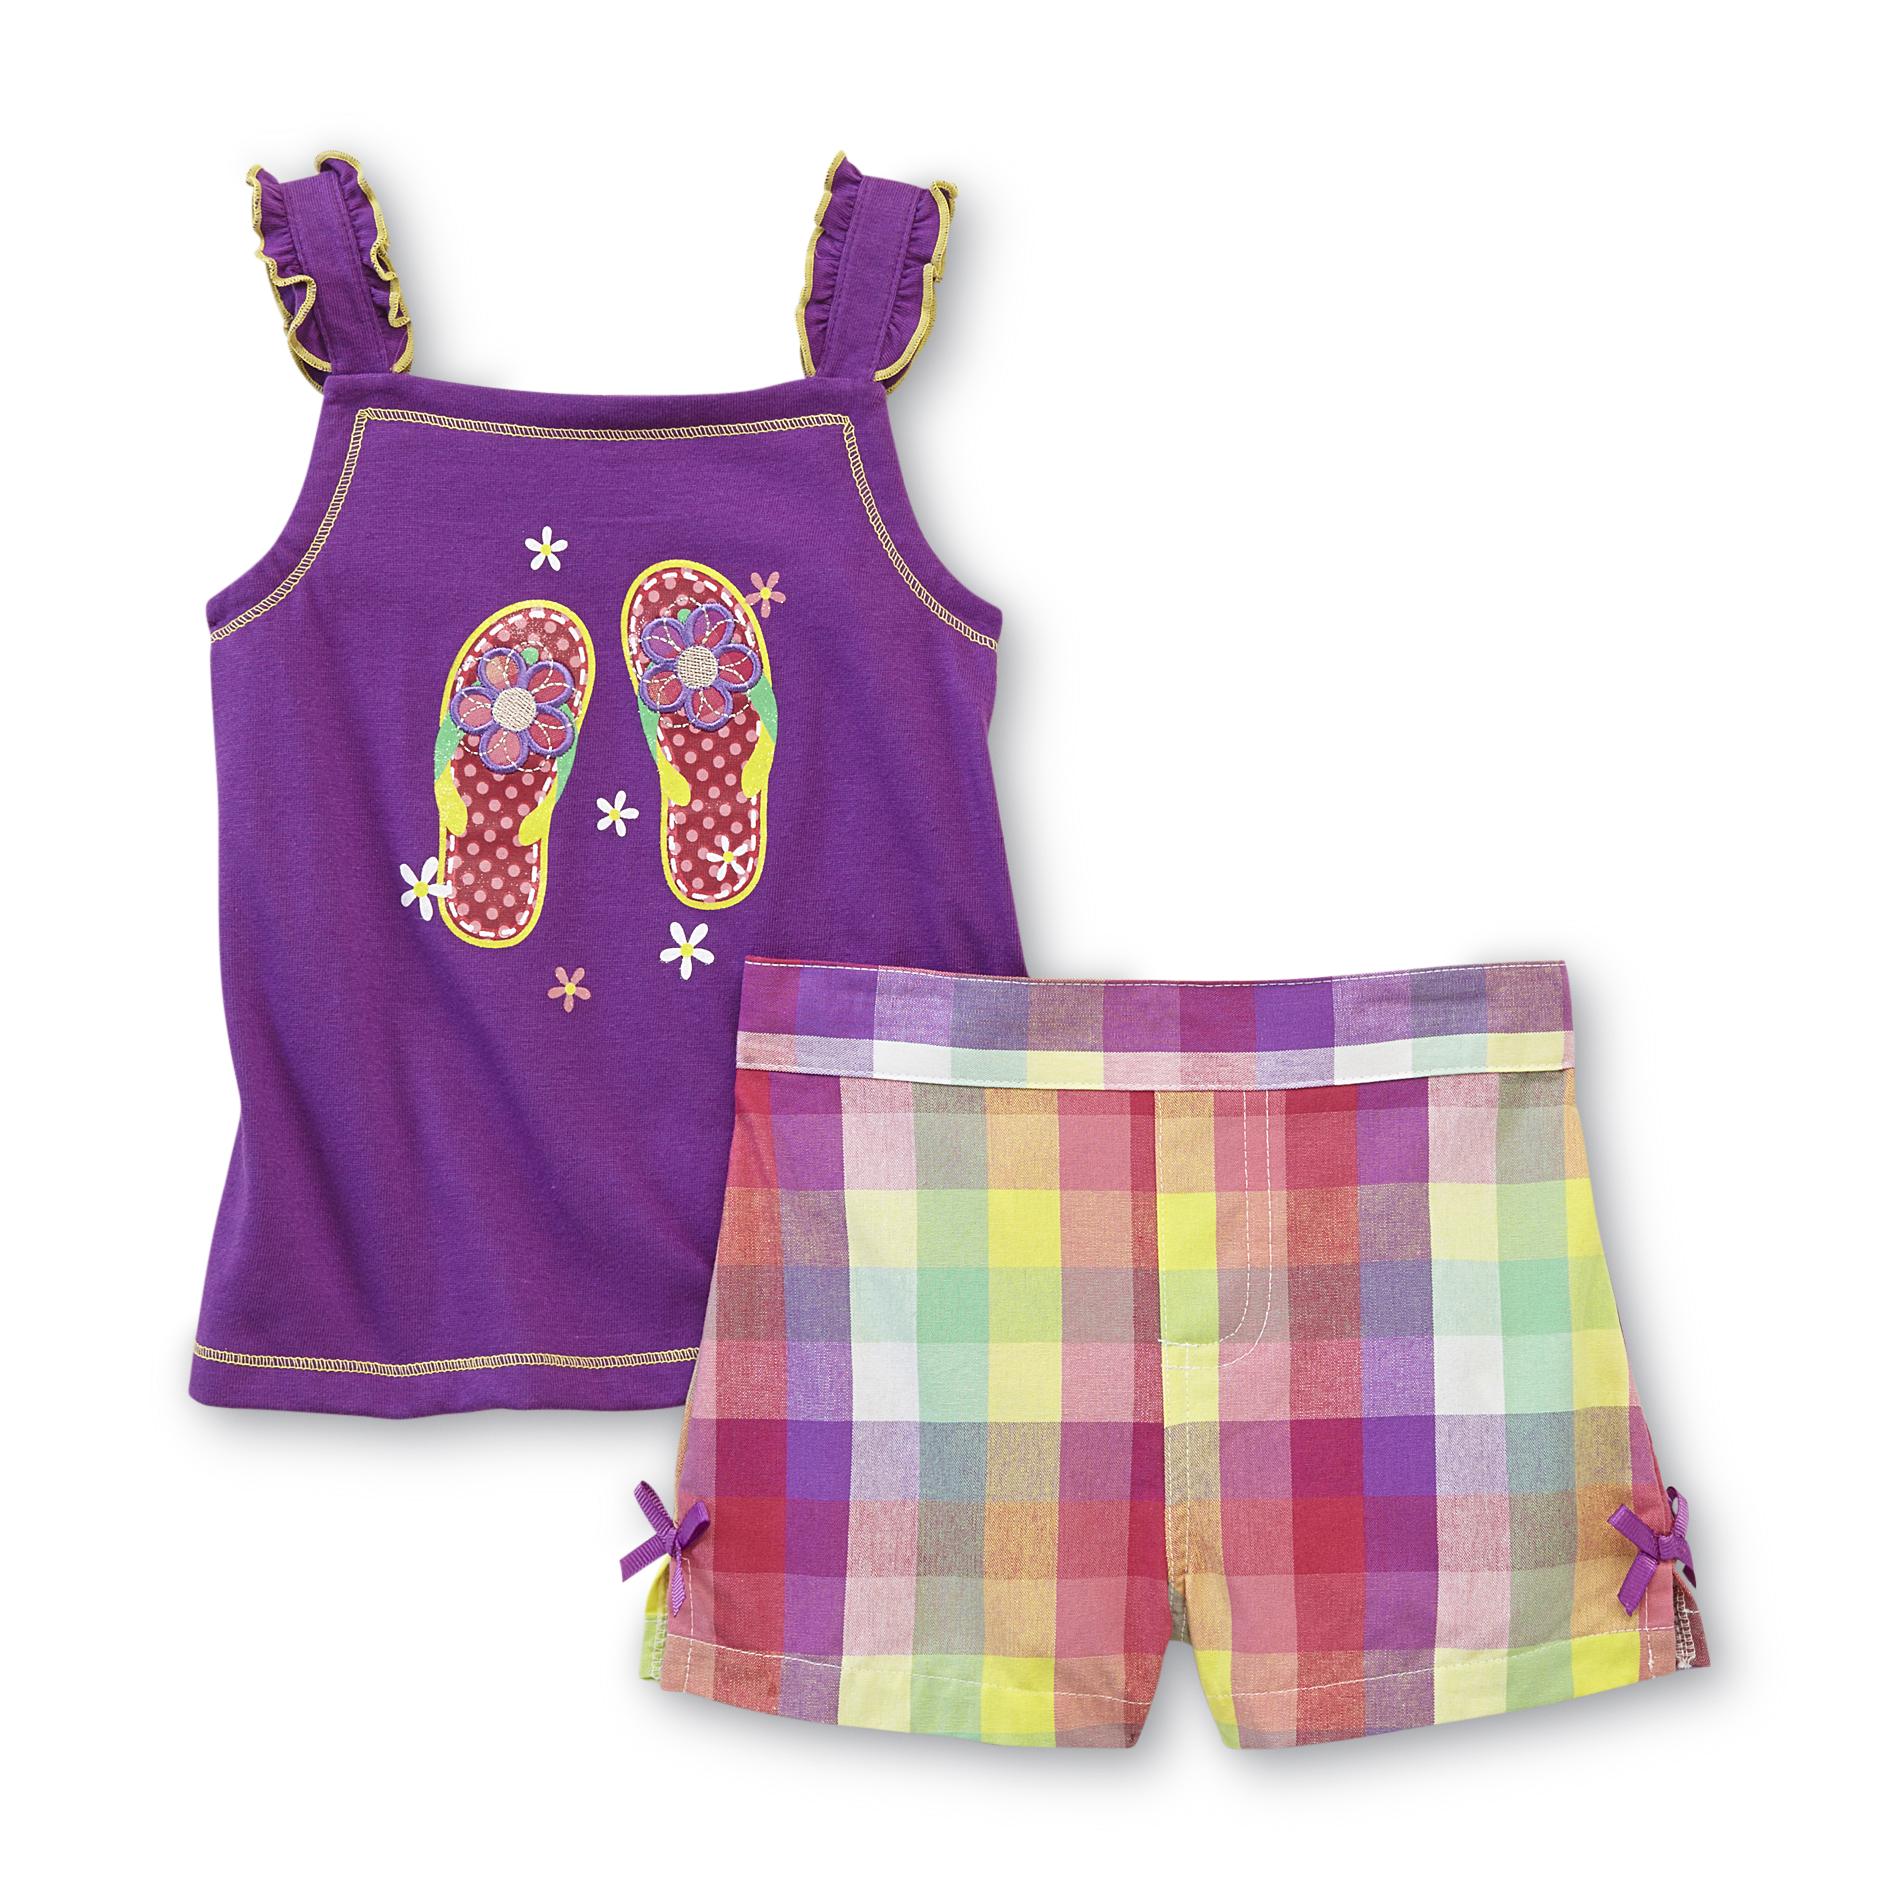 Kids Headquarters Infant Girl's Top & Shorts - Flip-Flops & Check